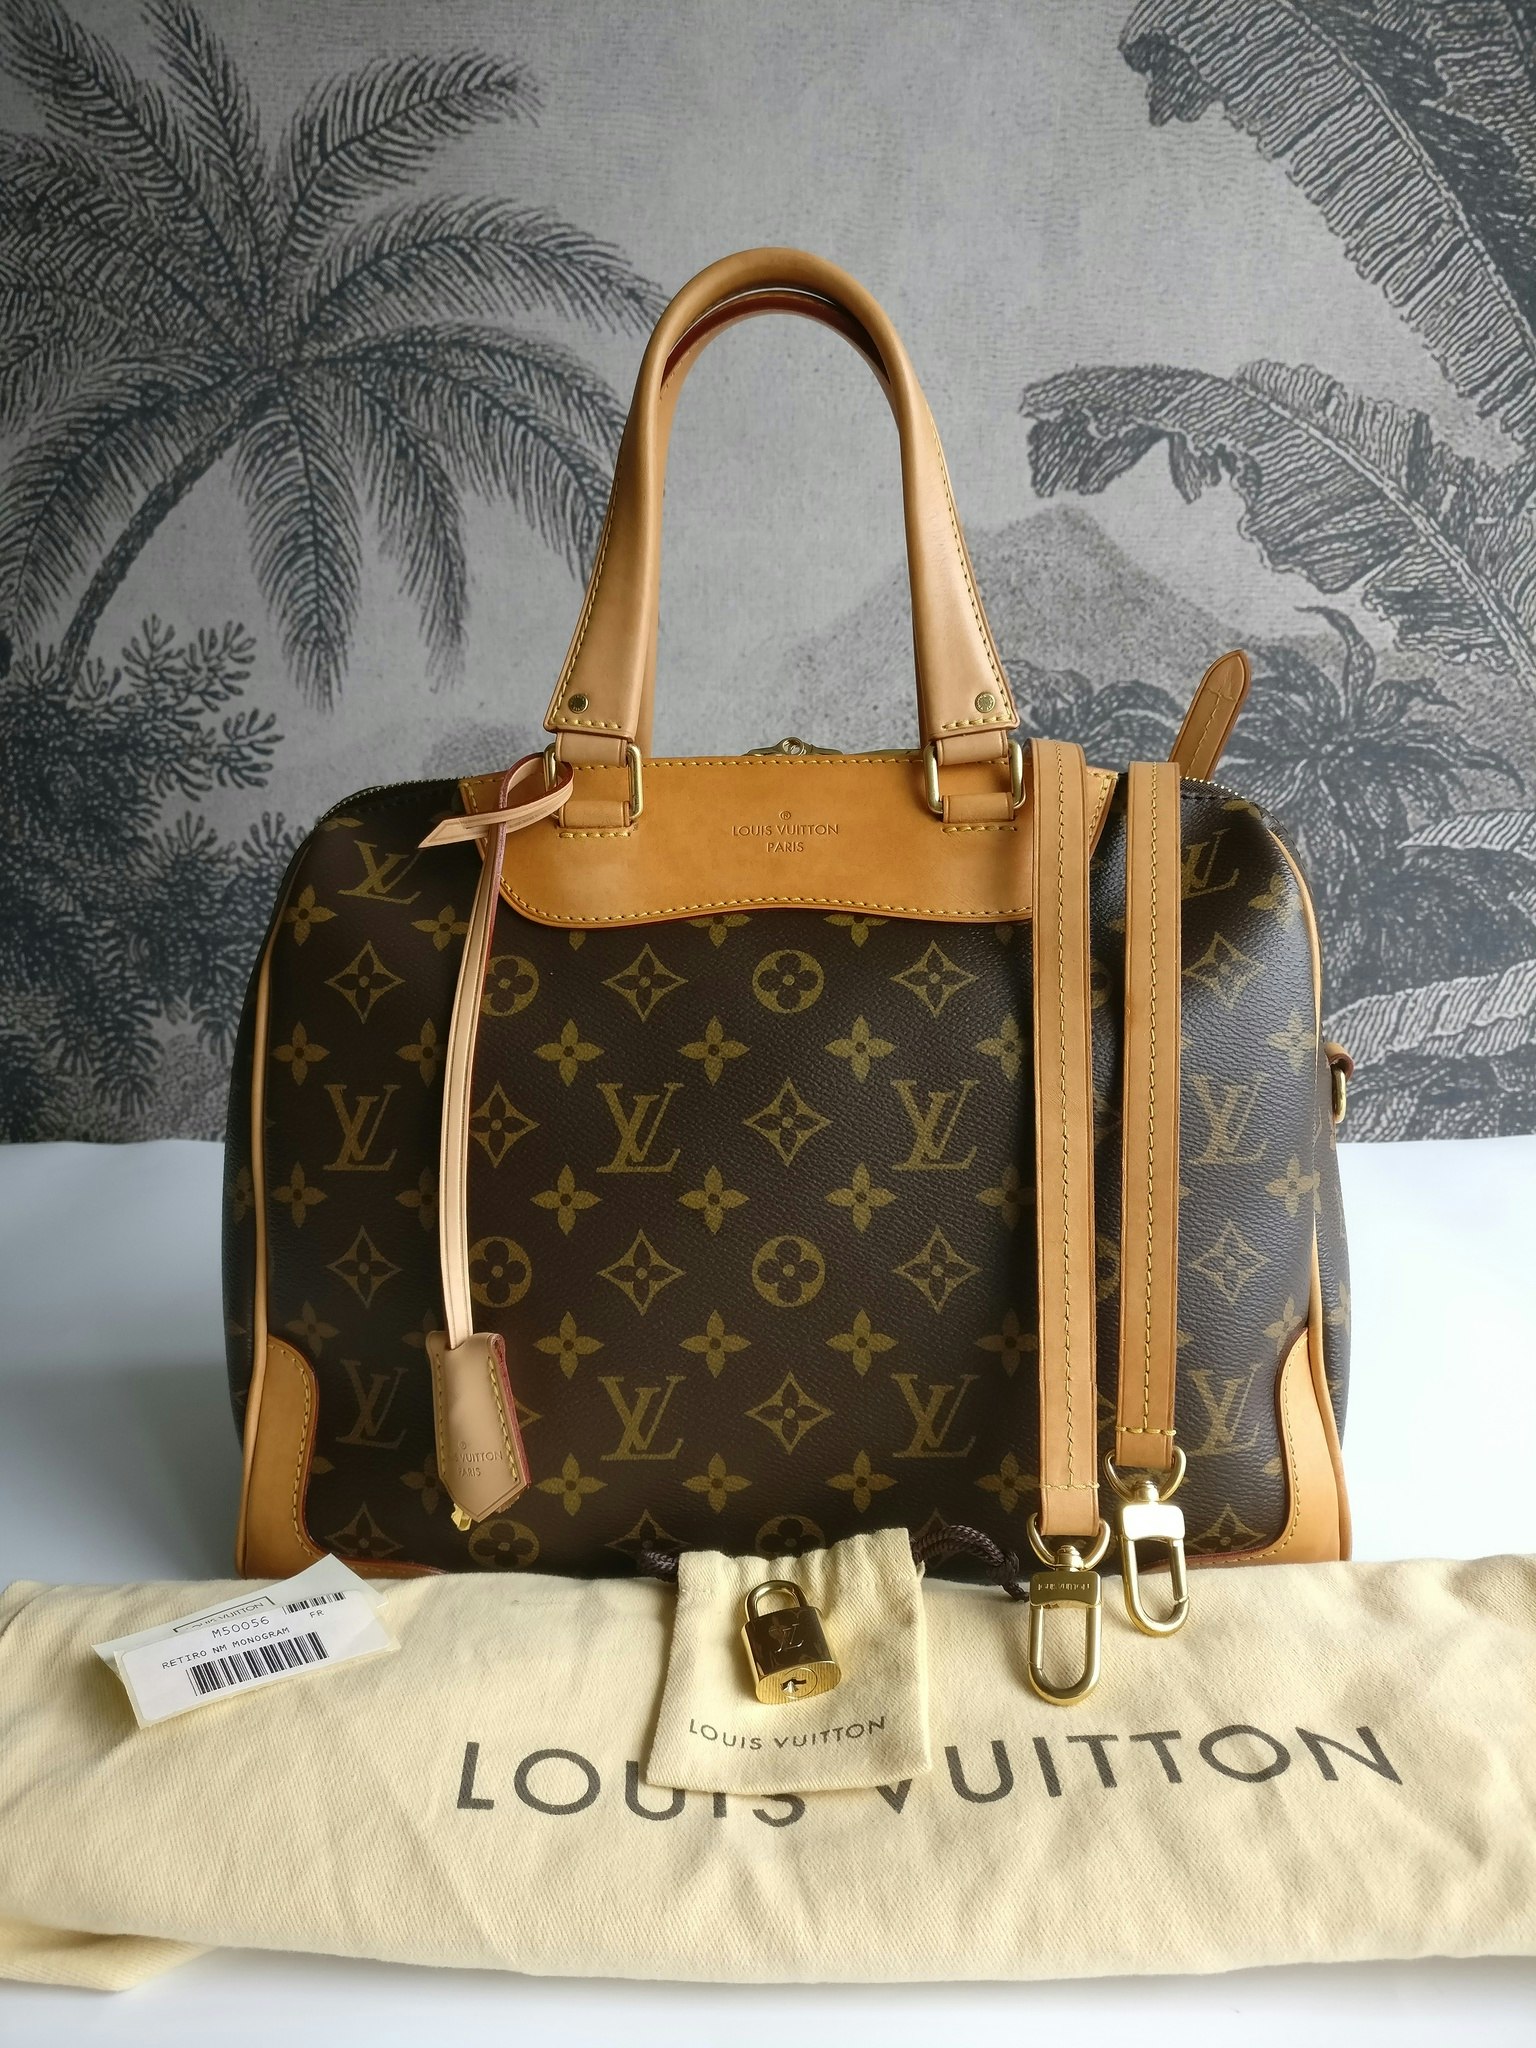 Buy Authentic, Preloved Louis Vuitton Monogram Retiro NM Bags from